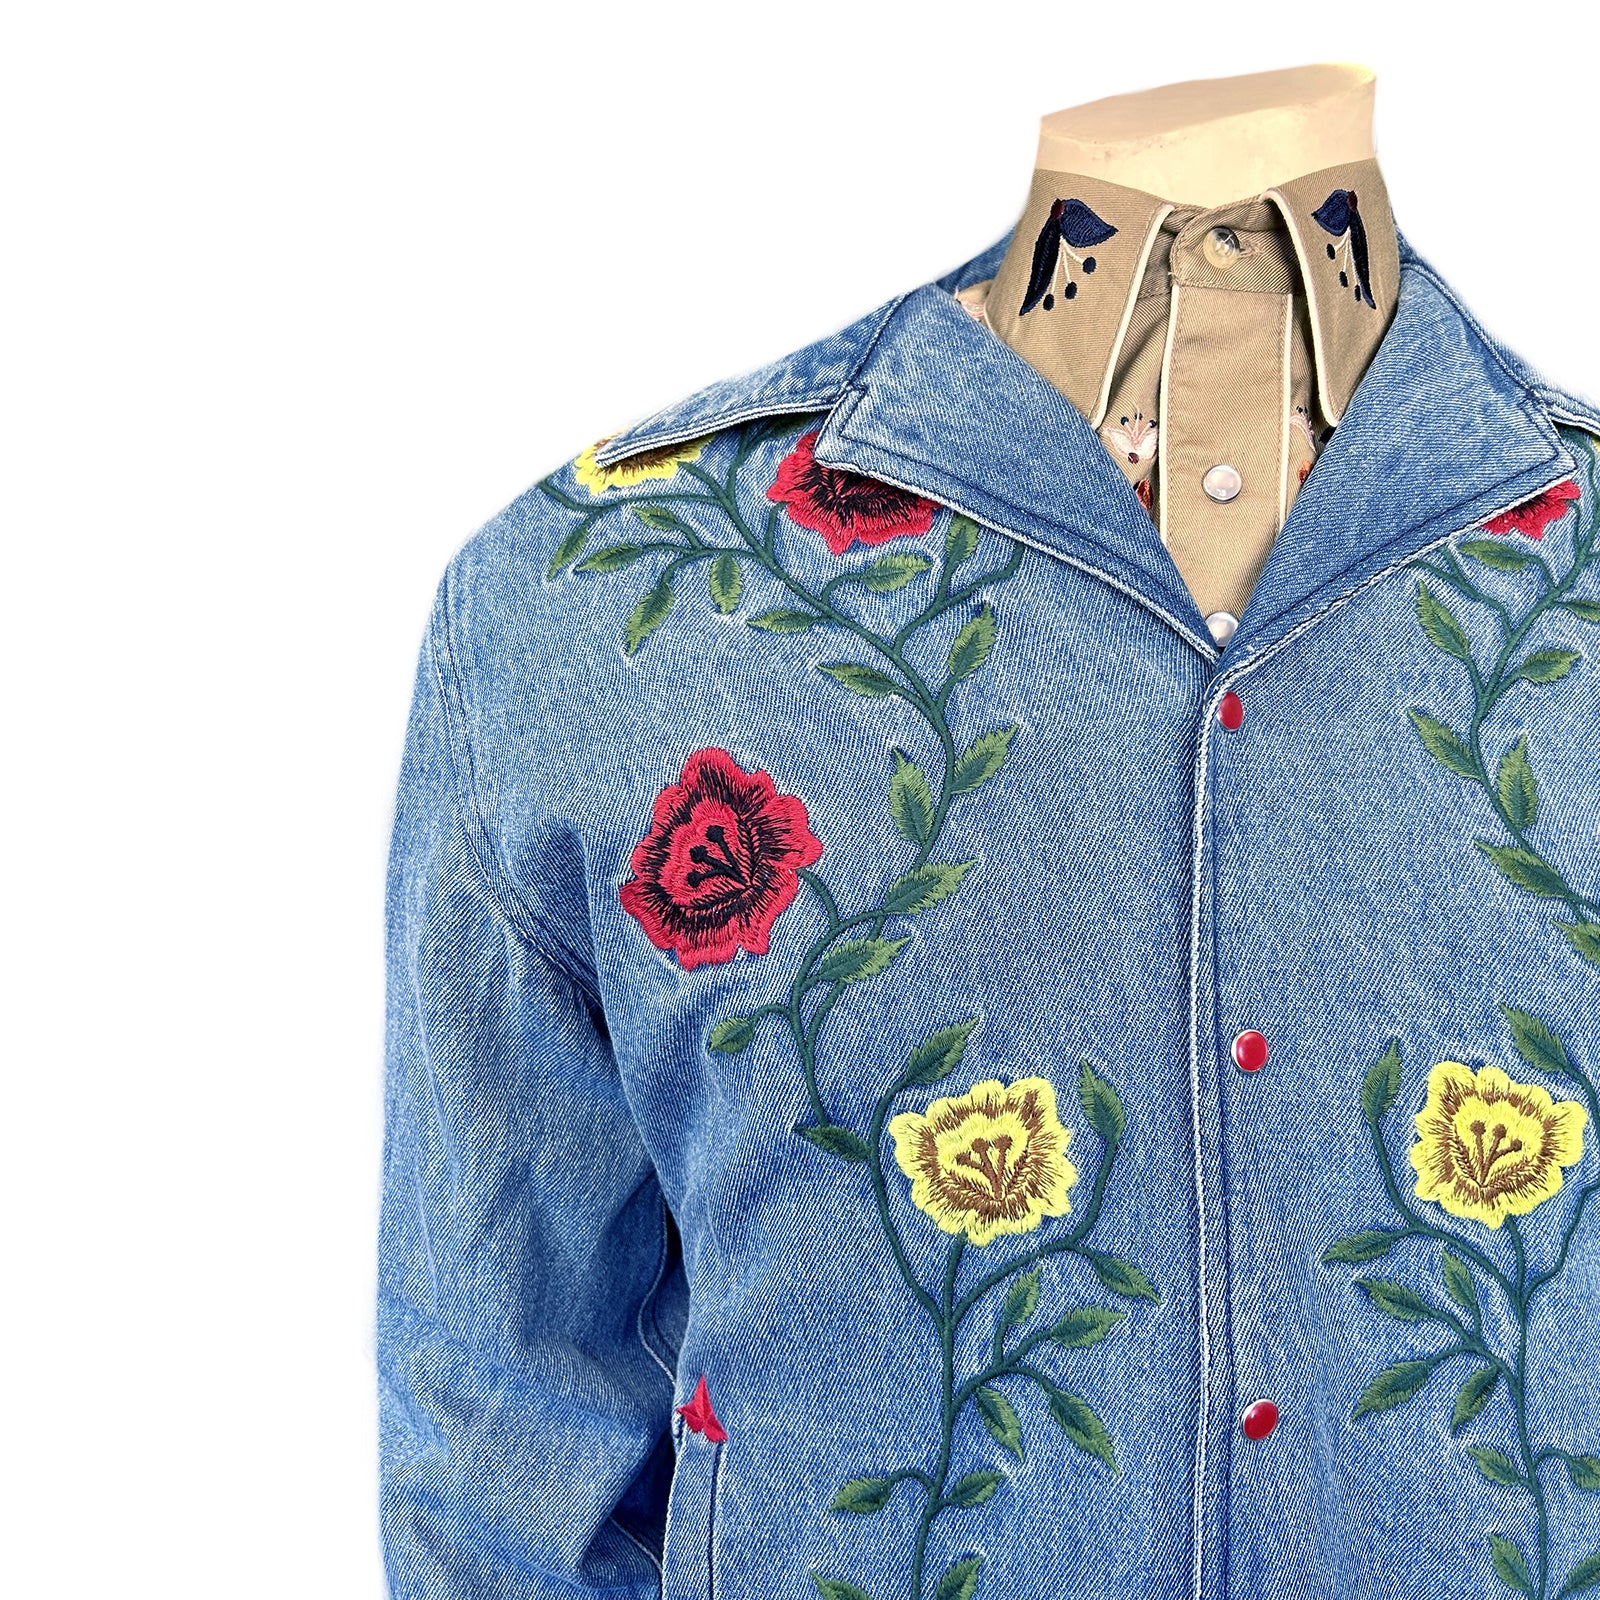 Unisex Vintage Western Denim Bolero Jacket with Floral Embroidery